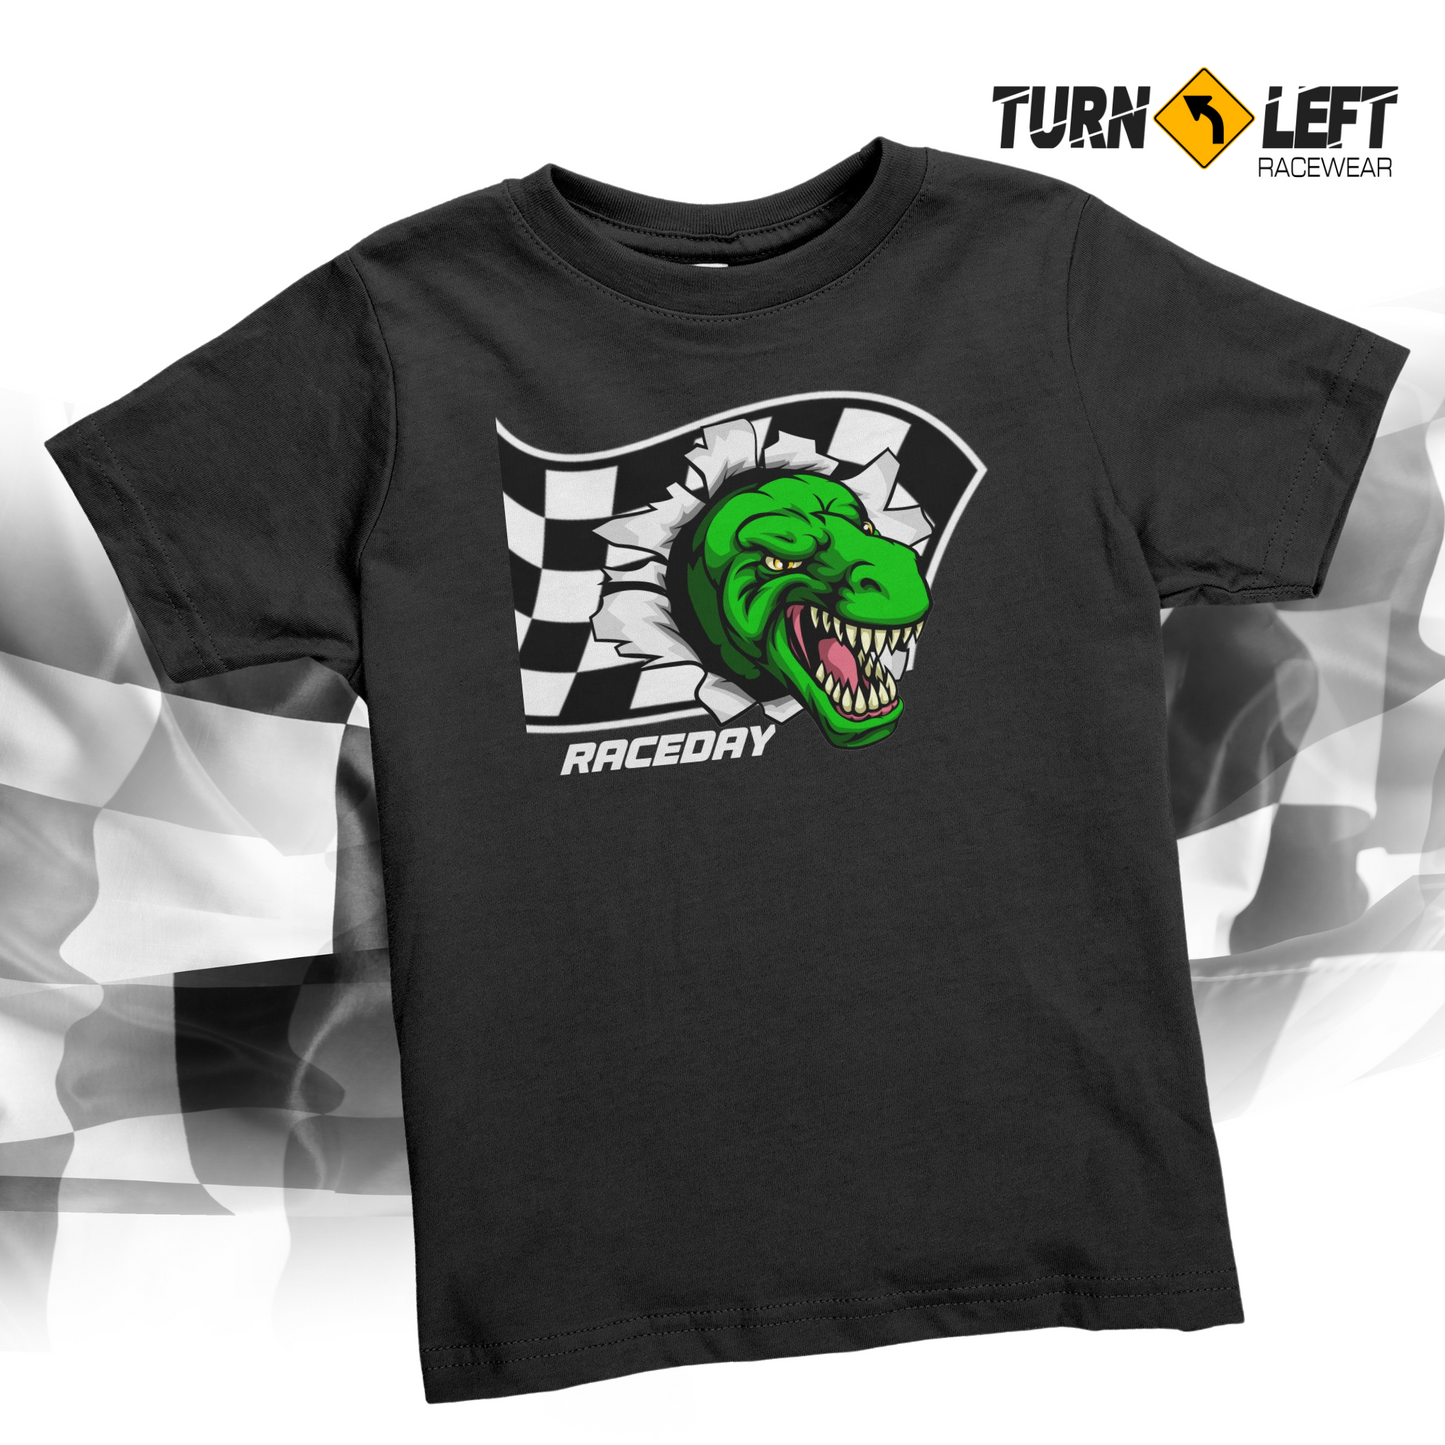 Kids Racing T-shirts Toddler racing shirts. T-Rex Racing Checkered flag race shirts. Racecar shirts for toddlers